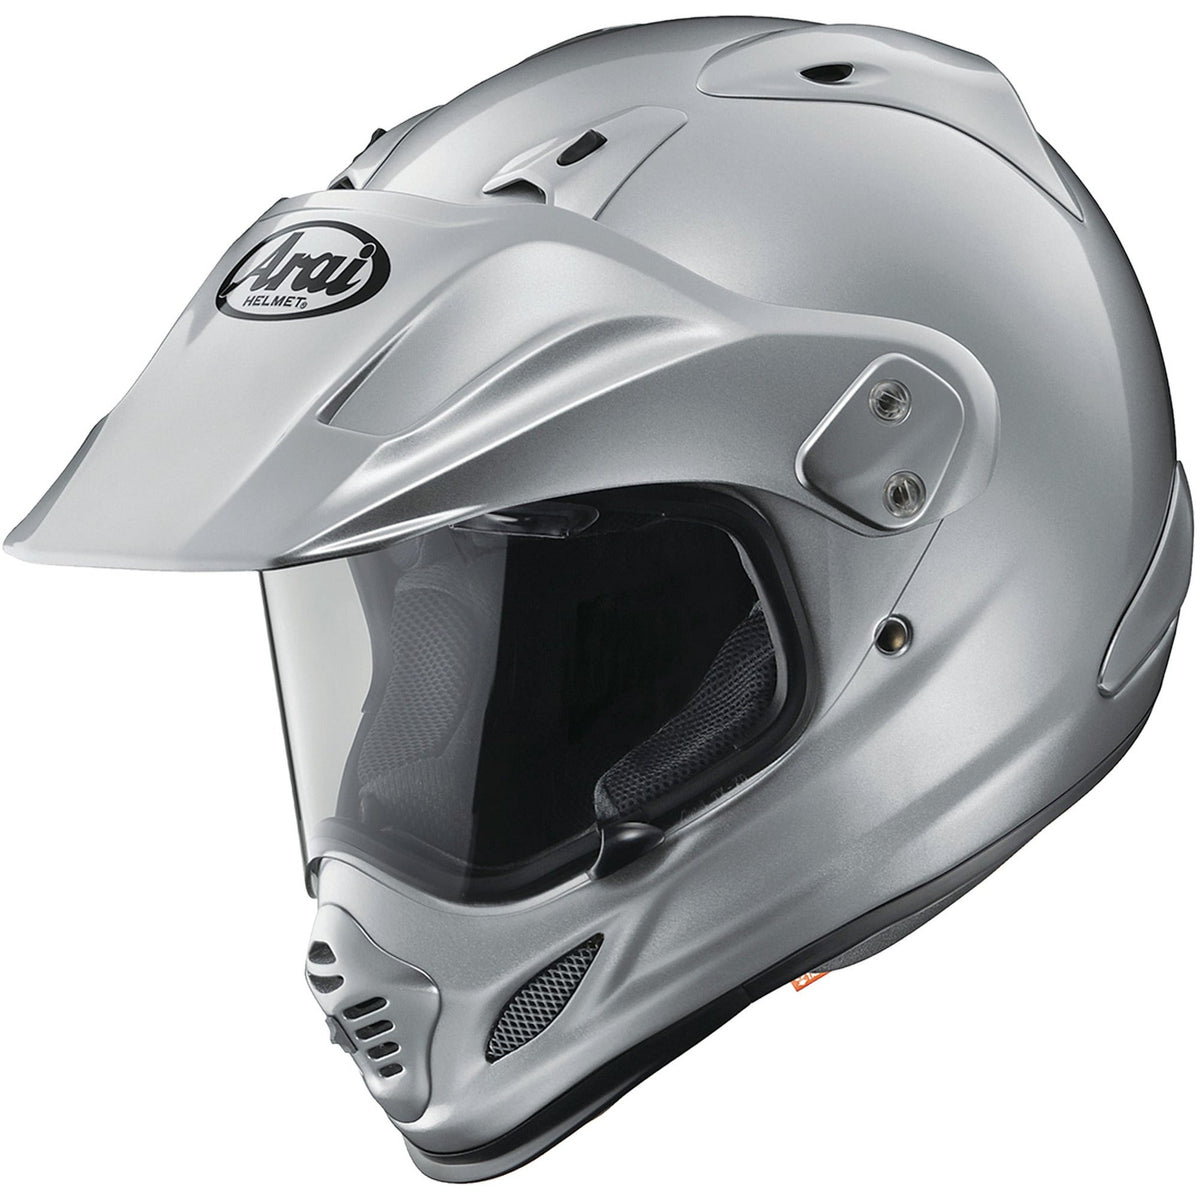 XD-4 Helmet (Aluminum Silver)